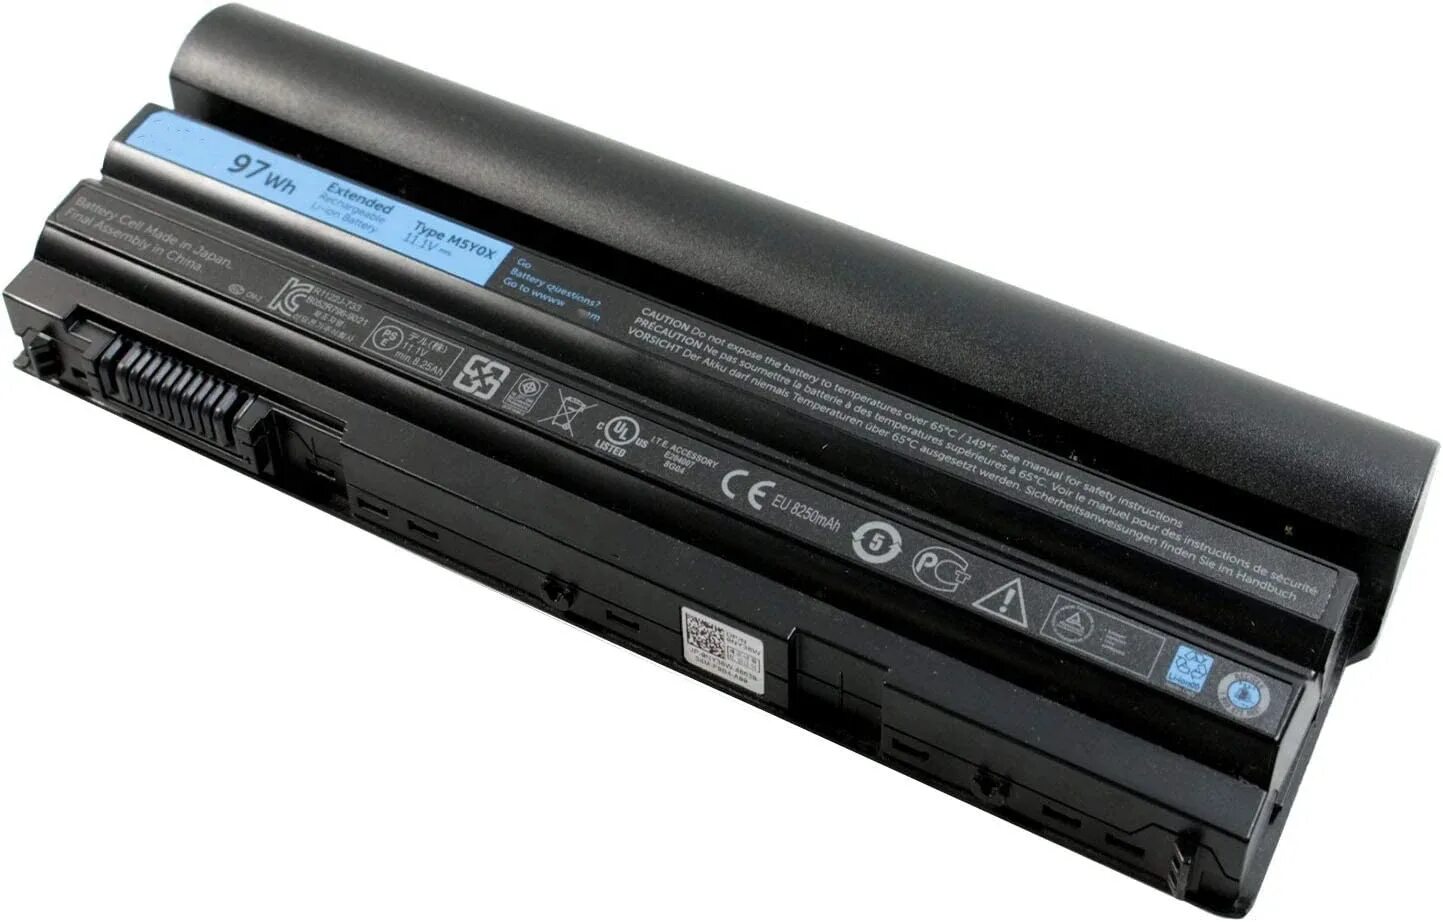 Батарея dell Latitude e6430. 97wh батарея для ноутбука dell Latitude e5540 характеристики. Аккумуляторная батарея для ноутбука dell Latitude 5280. Dell Type m5y1k.